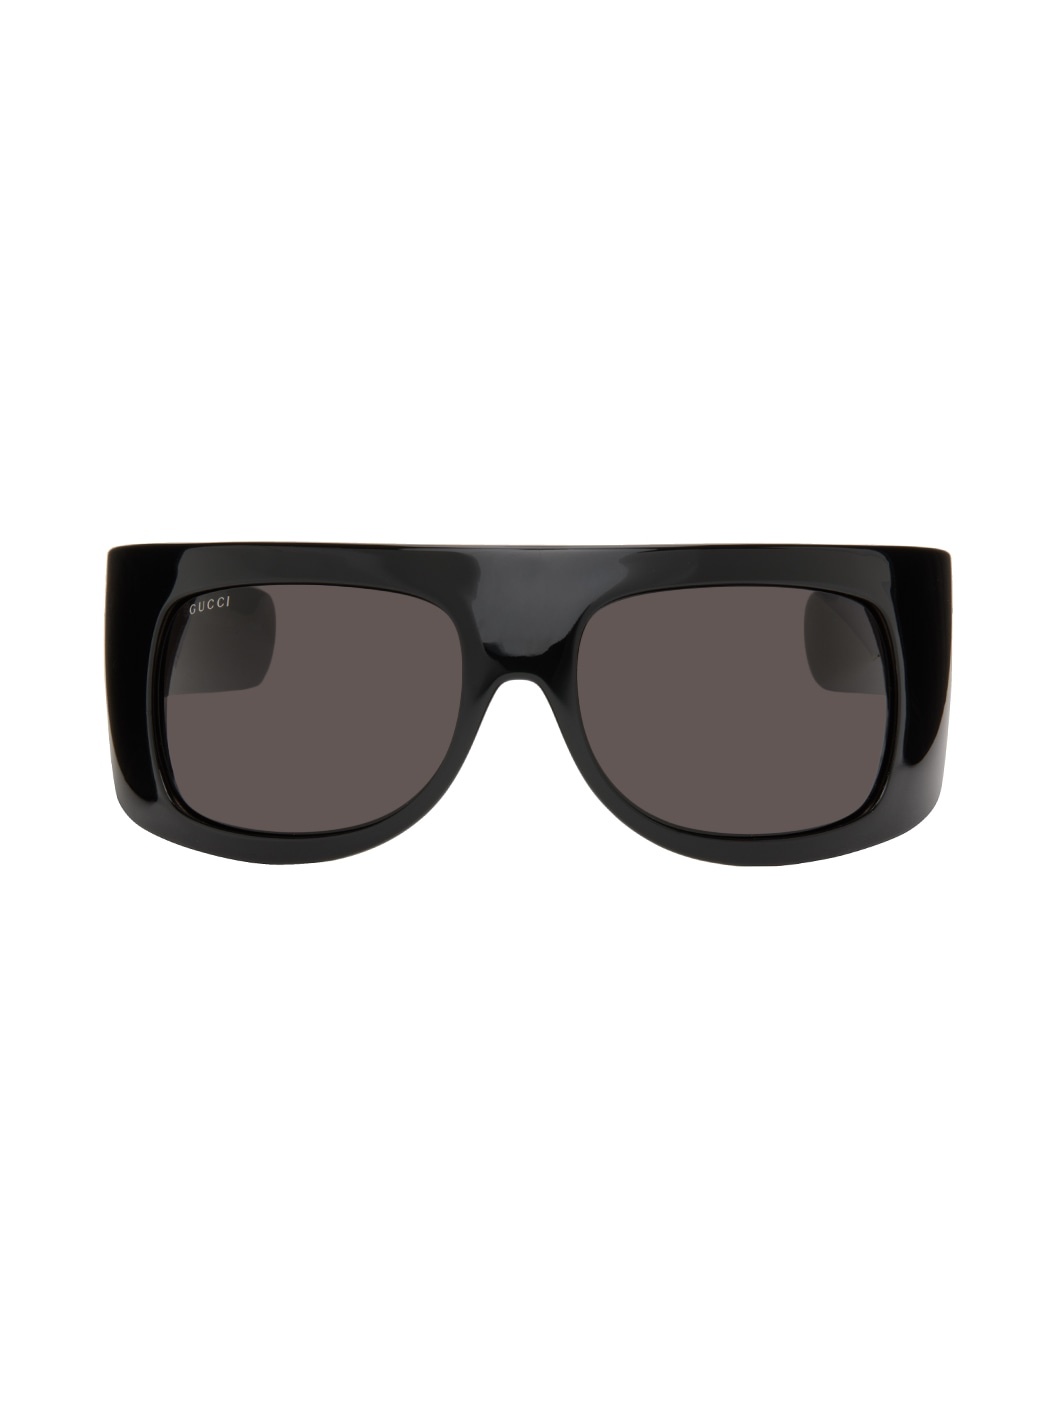 Black Mask Sunglasses - 1